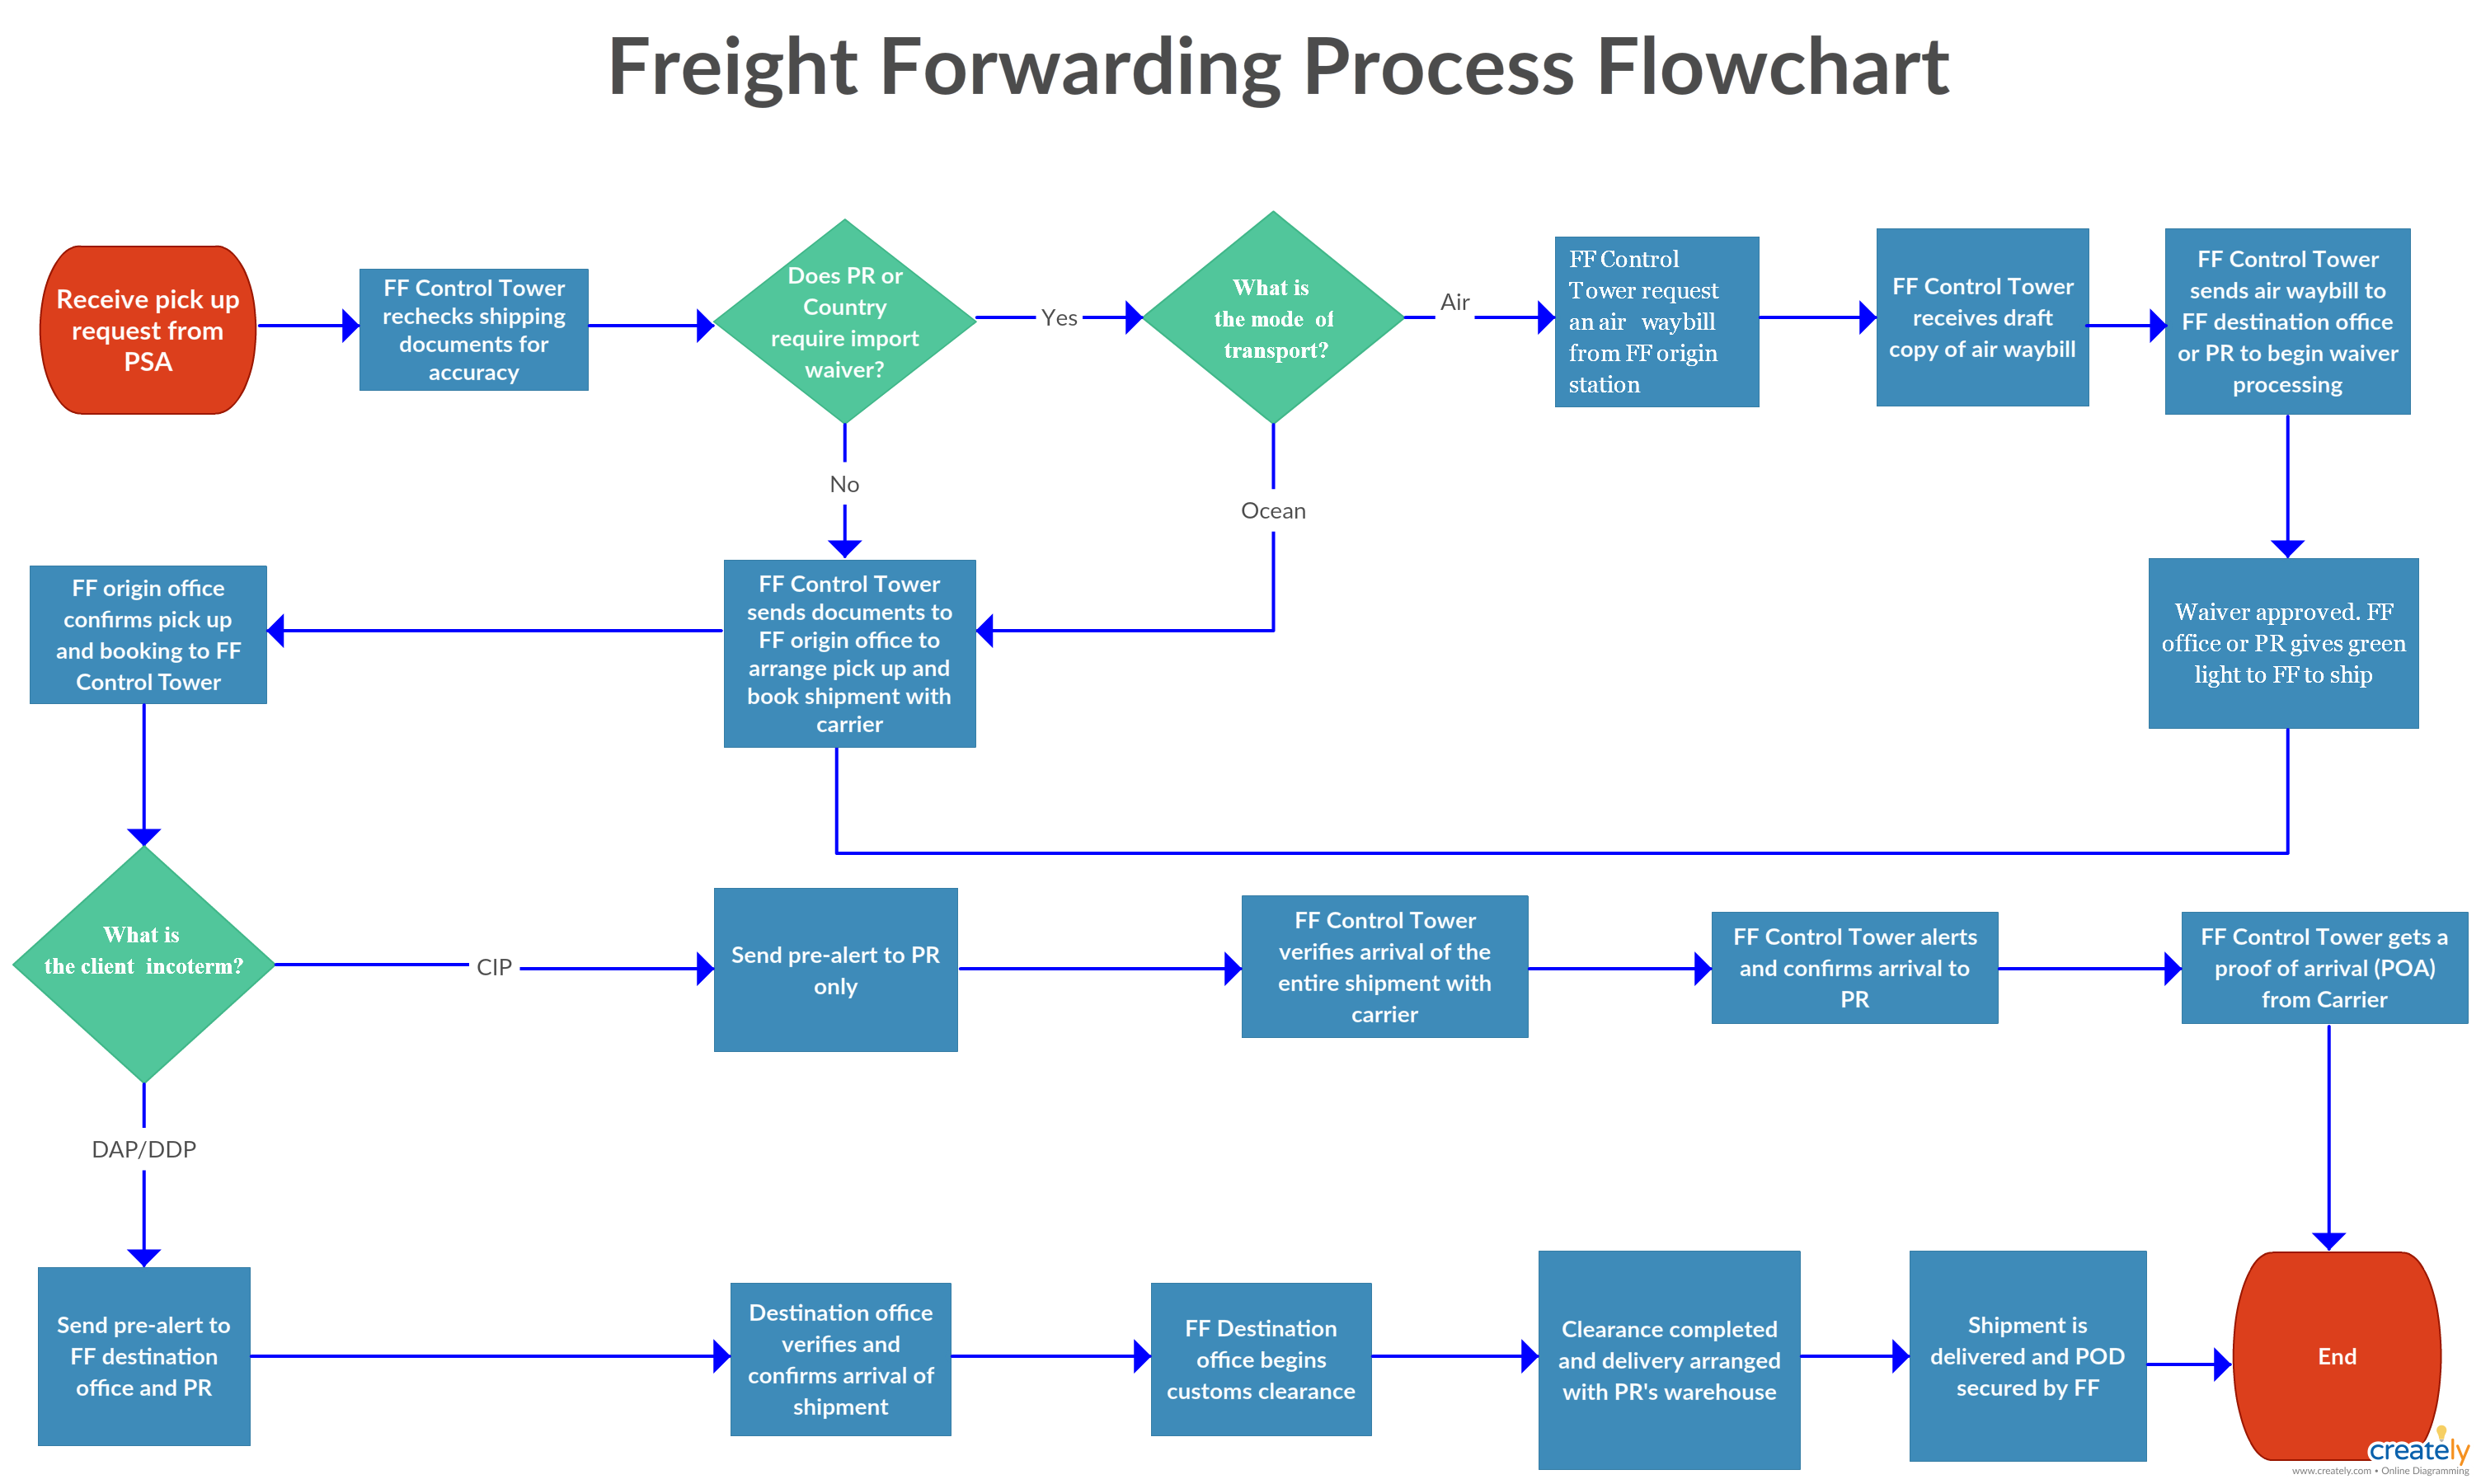 Freight Forwarding Process Flowchart - The Freight